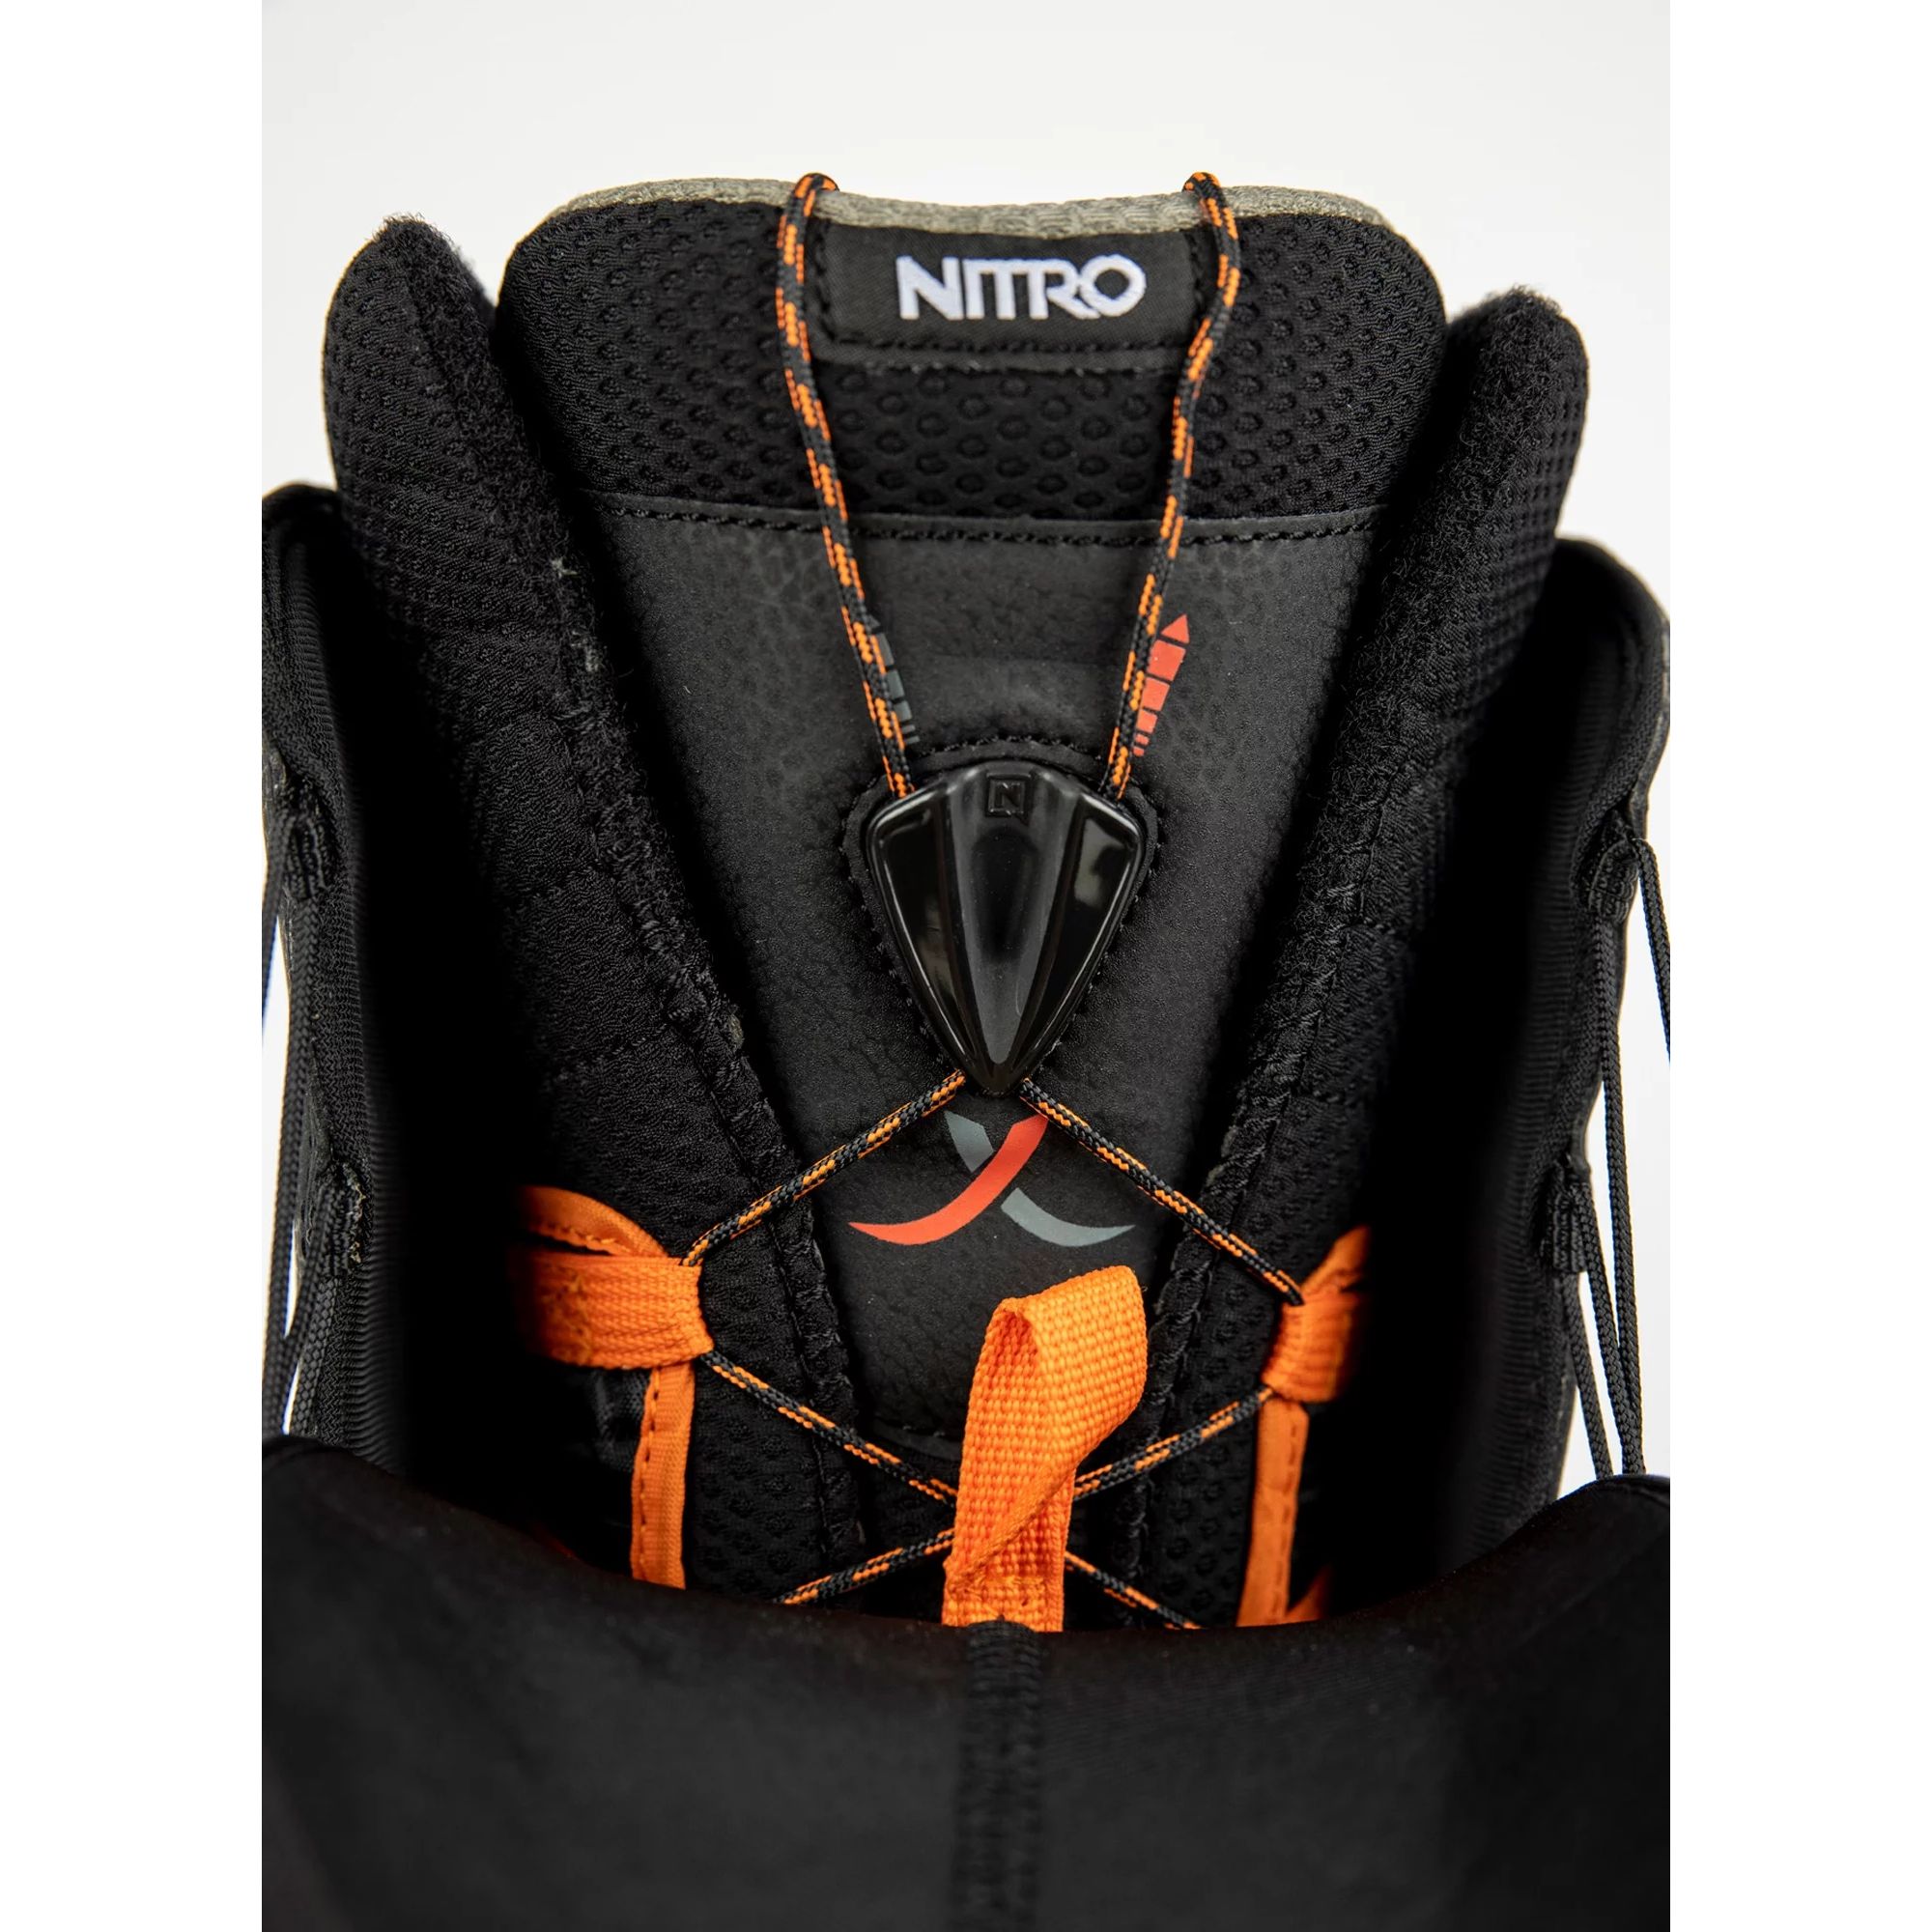 Boots Snowboard -  nitro VENTURE TLS